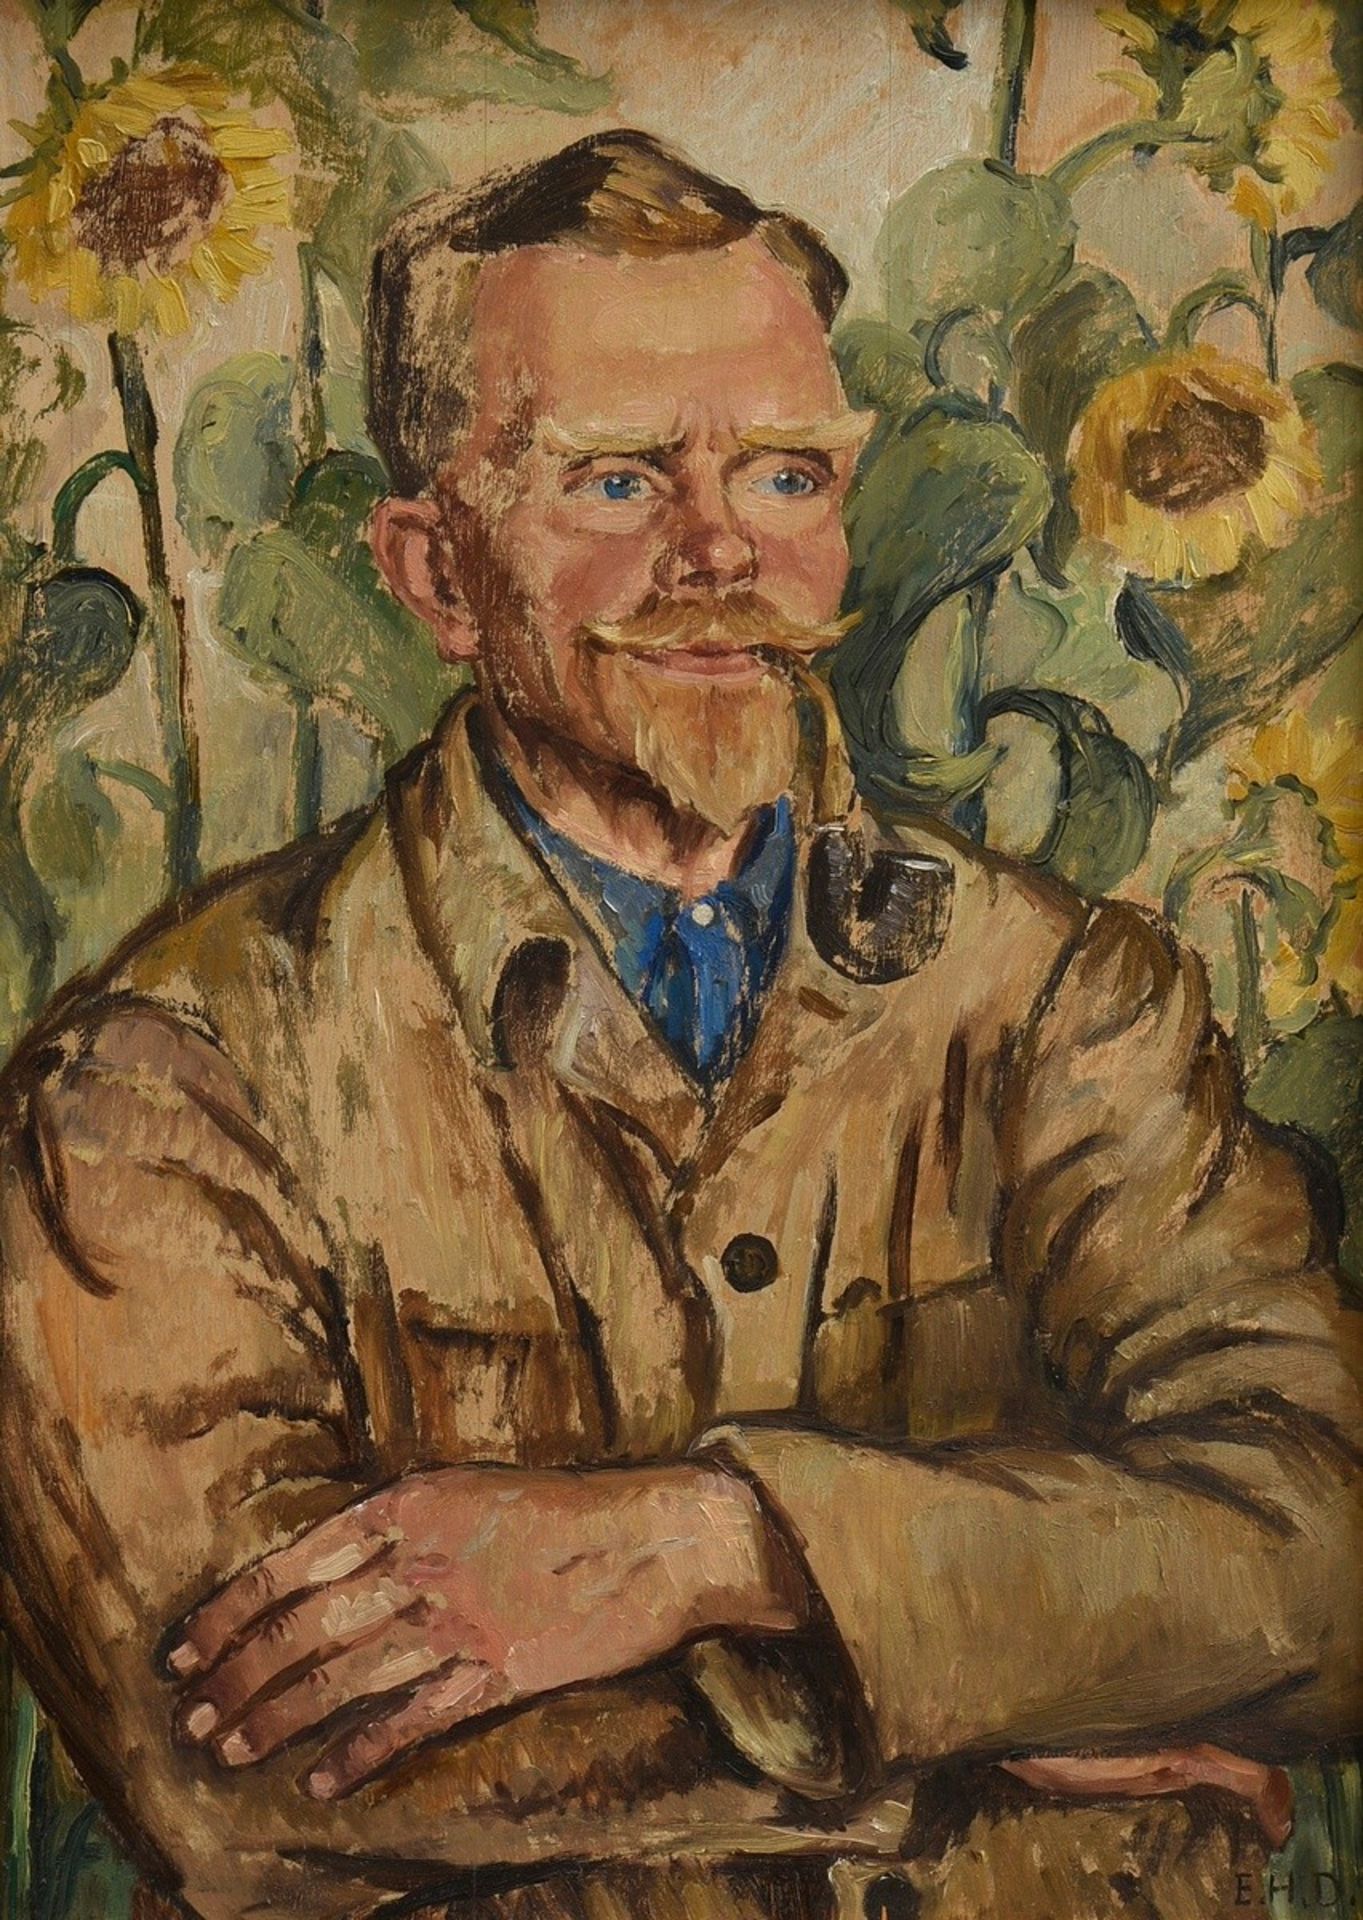 Haensgen-Dingkuhn, Elsa (1898-1991) "Portrait of a Man with a Pipe" (Christian Feddern) c. 1958, oi